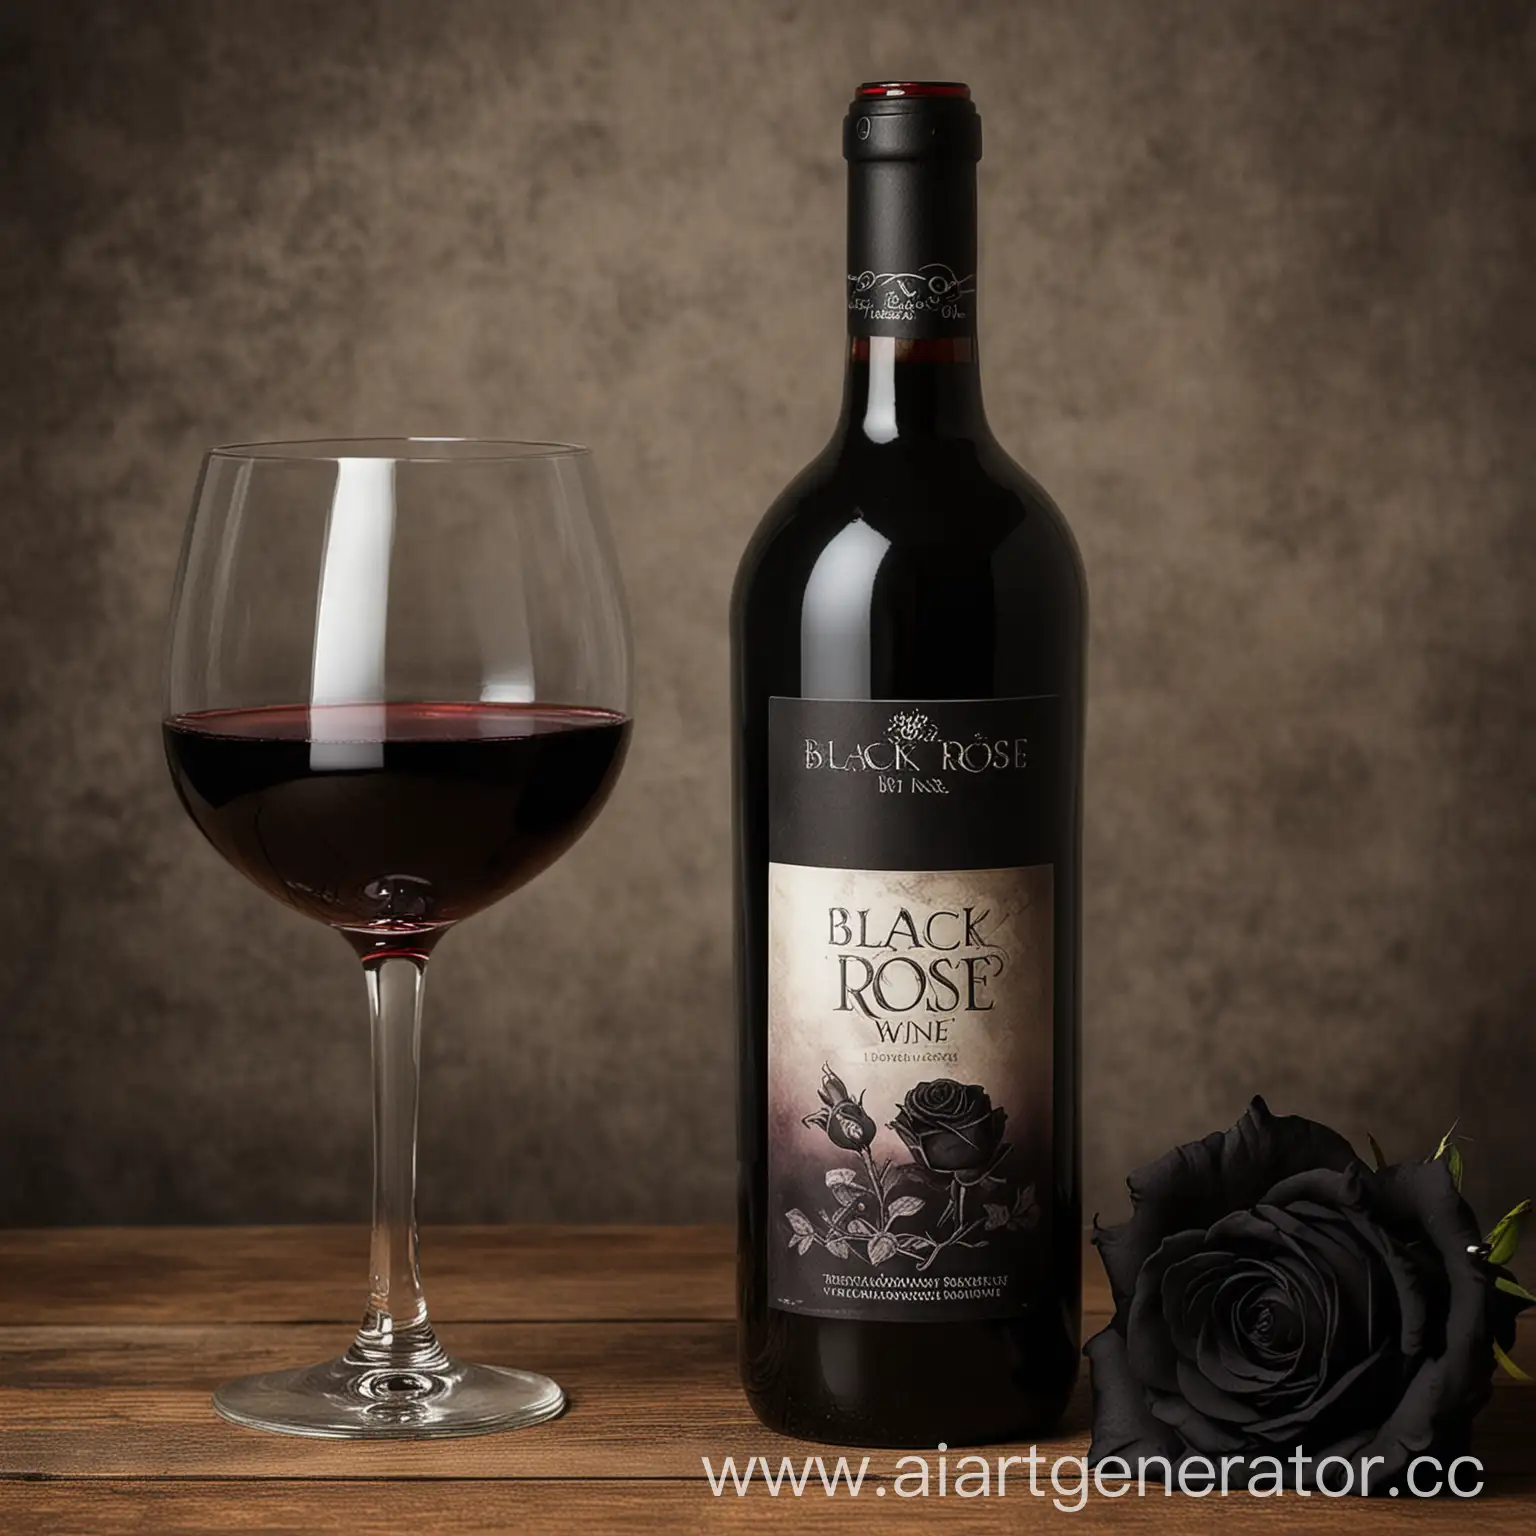 Black rose wine